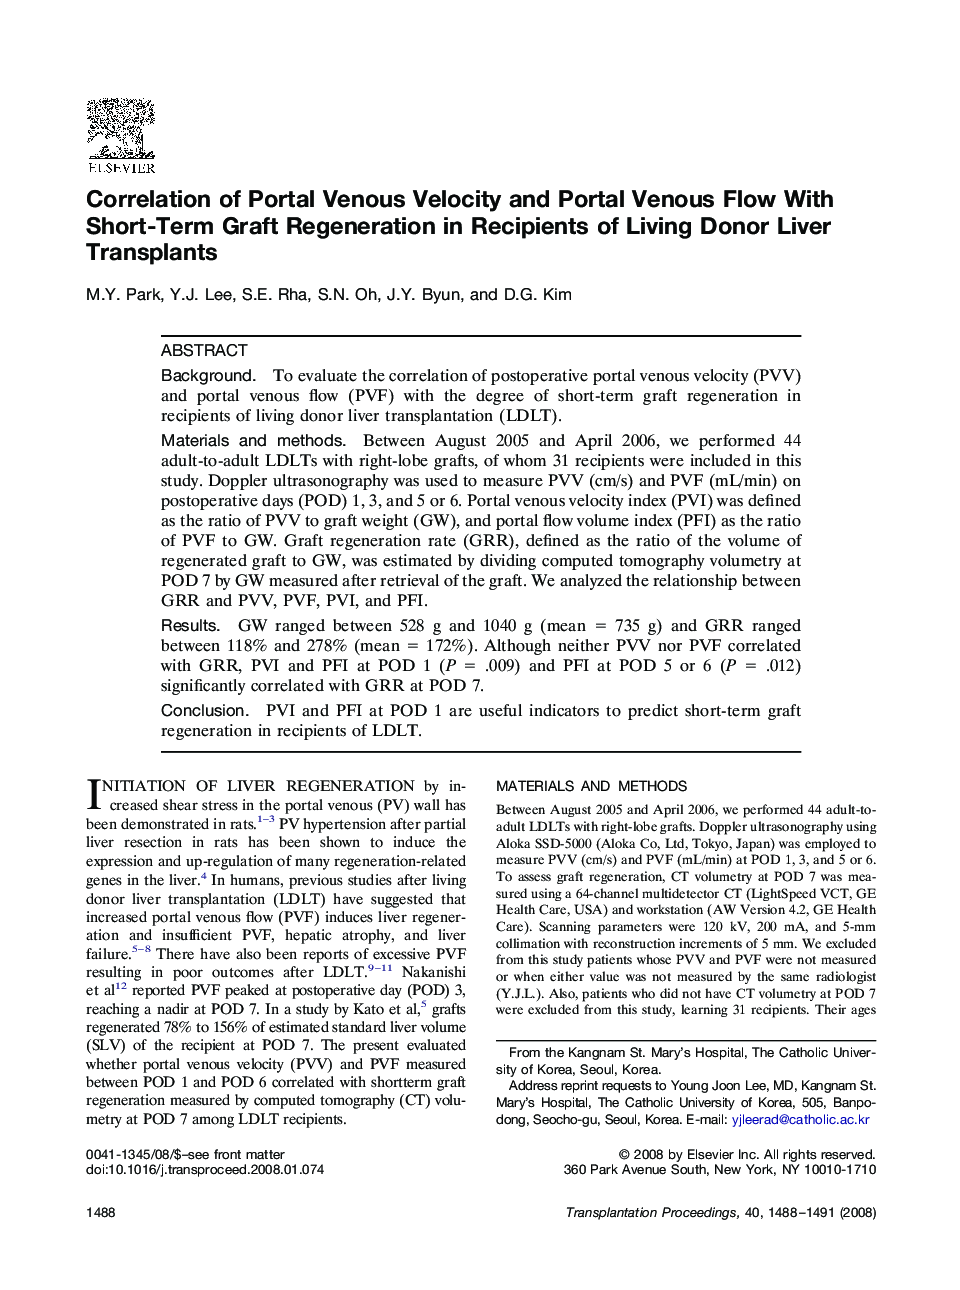 Correlation of Portal Venous Velocity and Portal Venous Flow With Short-Term Graft Regeneration in Recipients of Living Donor Liver Transplants